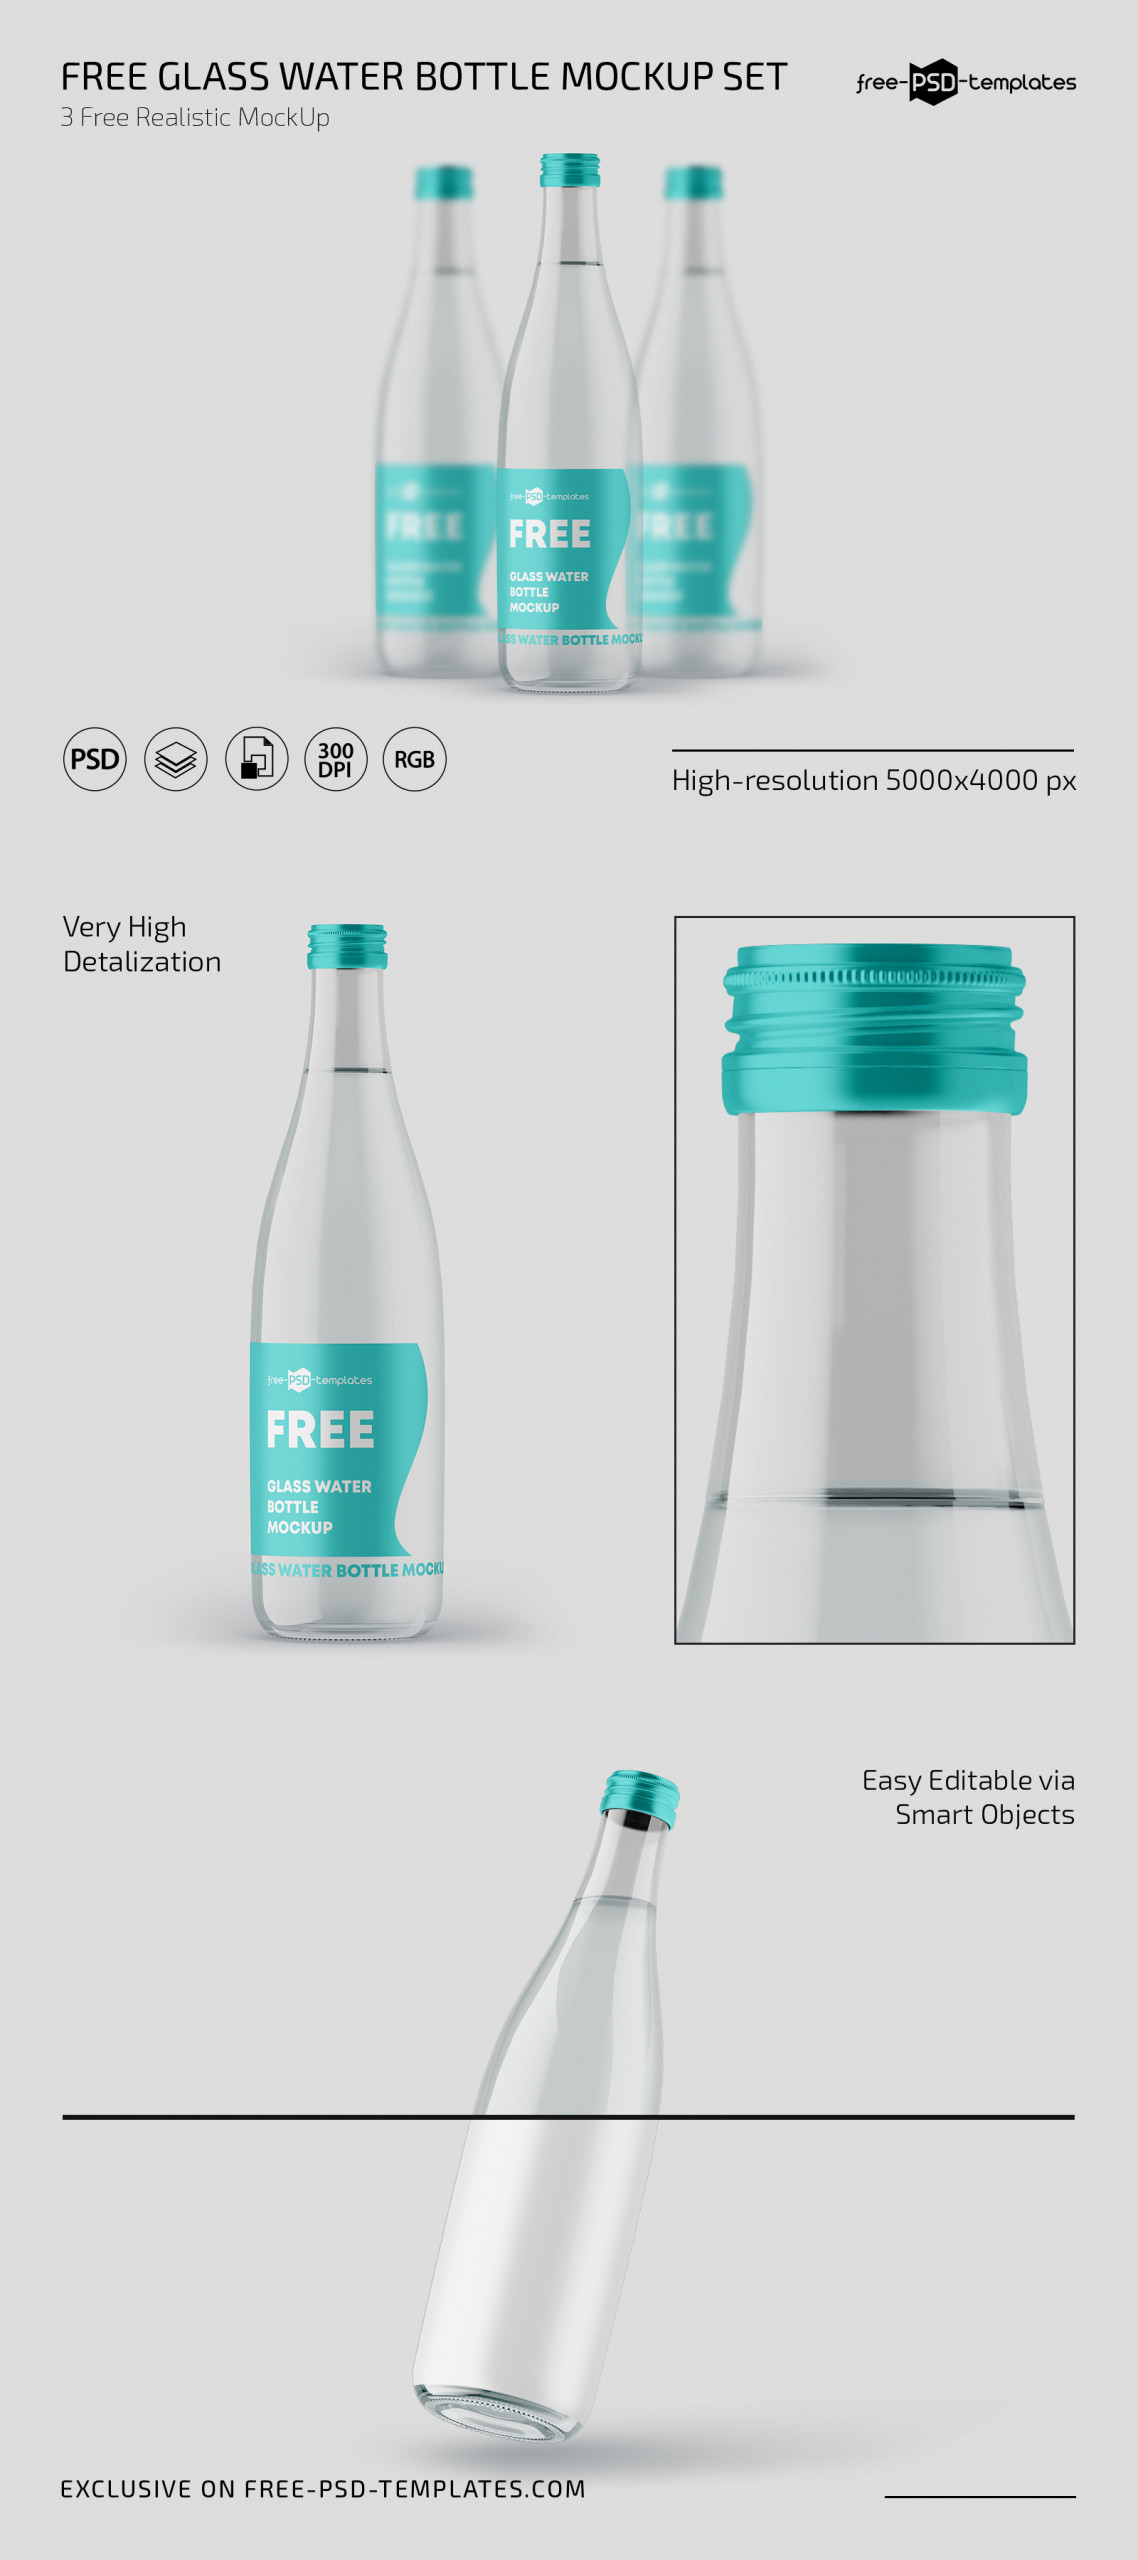 Web Pv Free Glass Water Bottle Mockup scaled